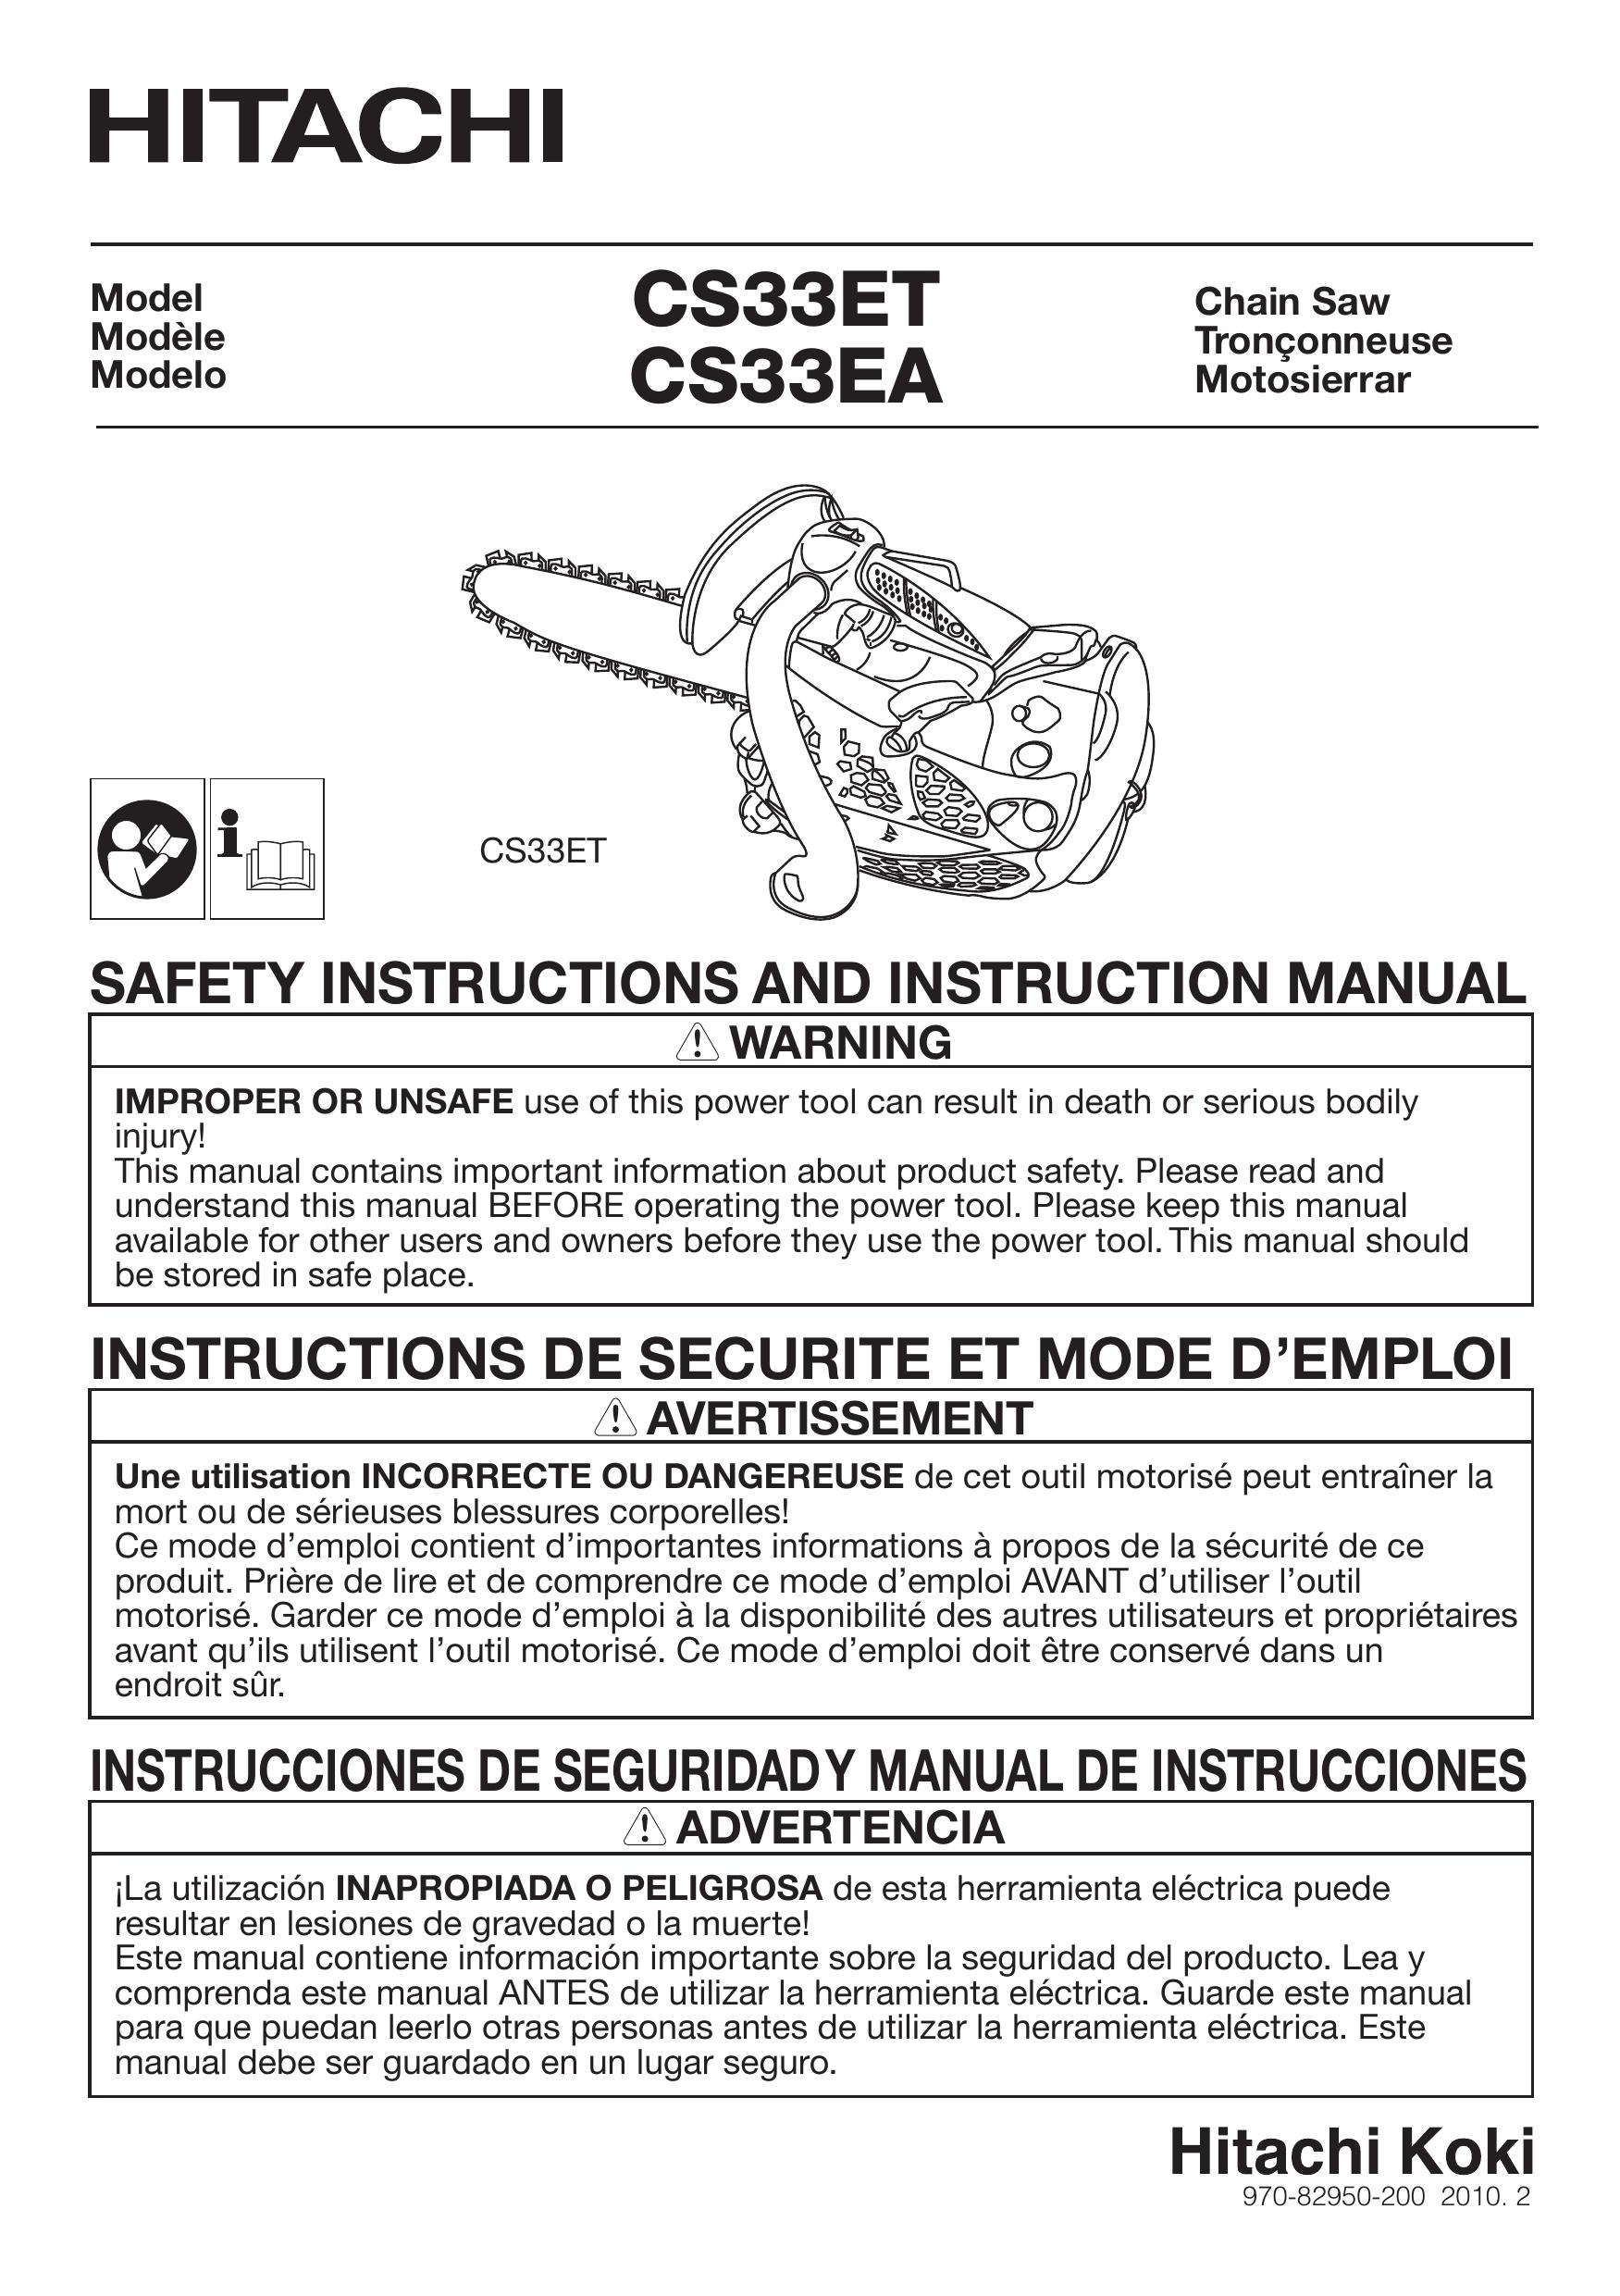 Hitachi Koki USA CS33EA Chainsaw Sharpener User Manual